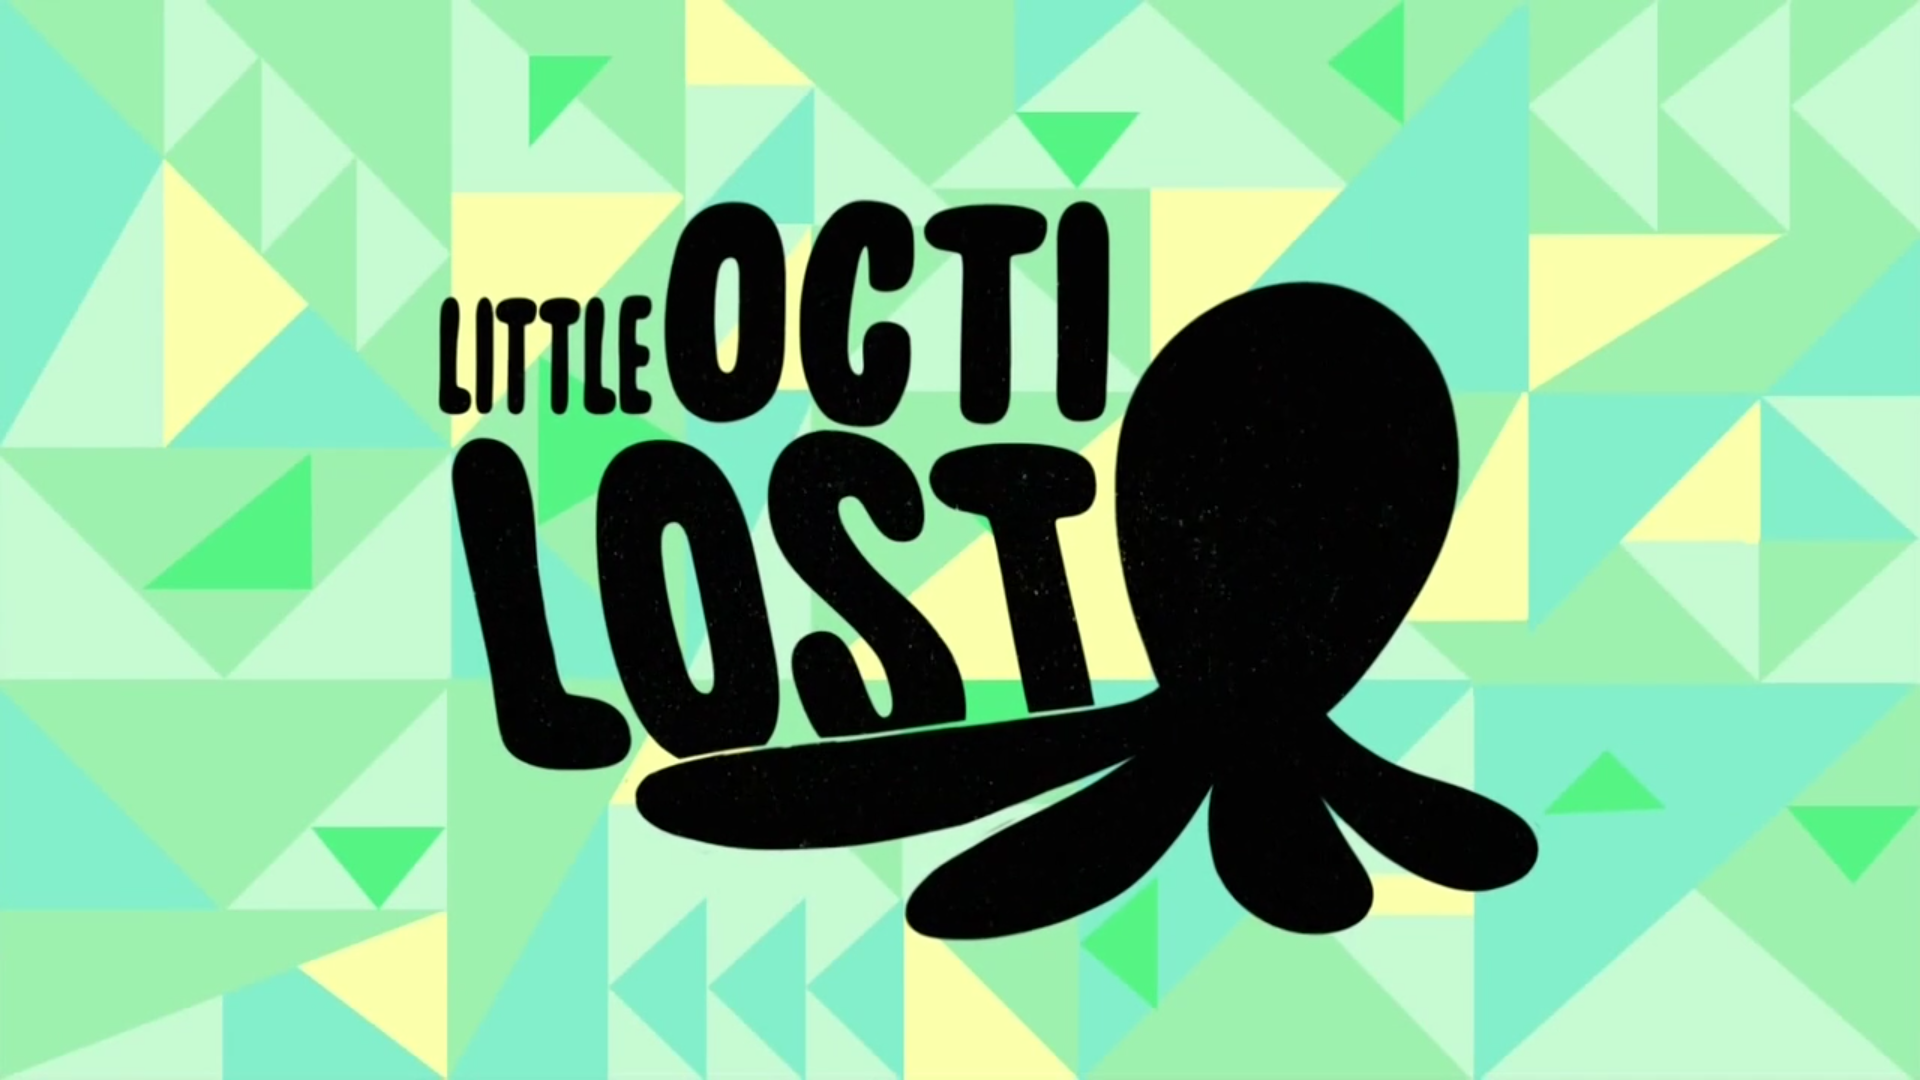 8 серия 1 сезона Little Octi Lost